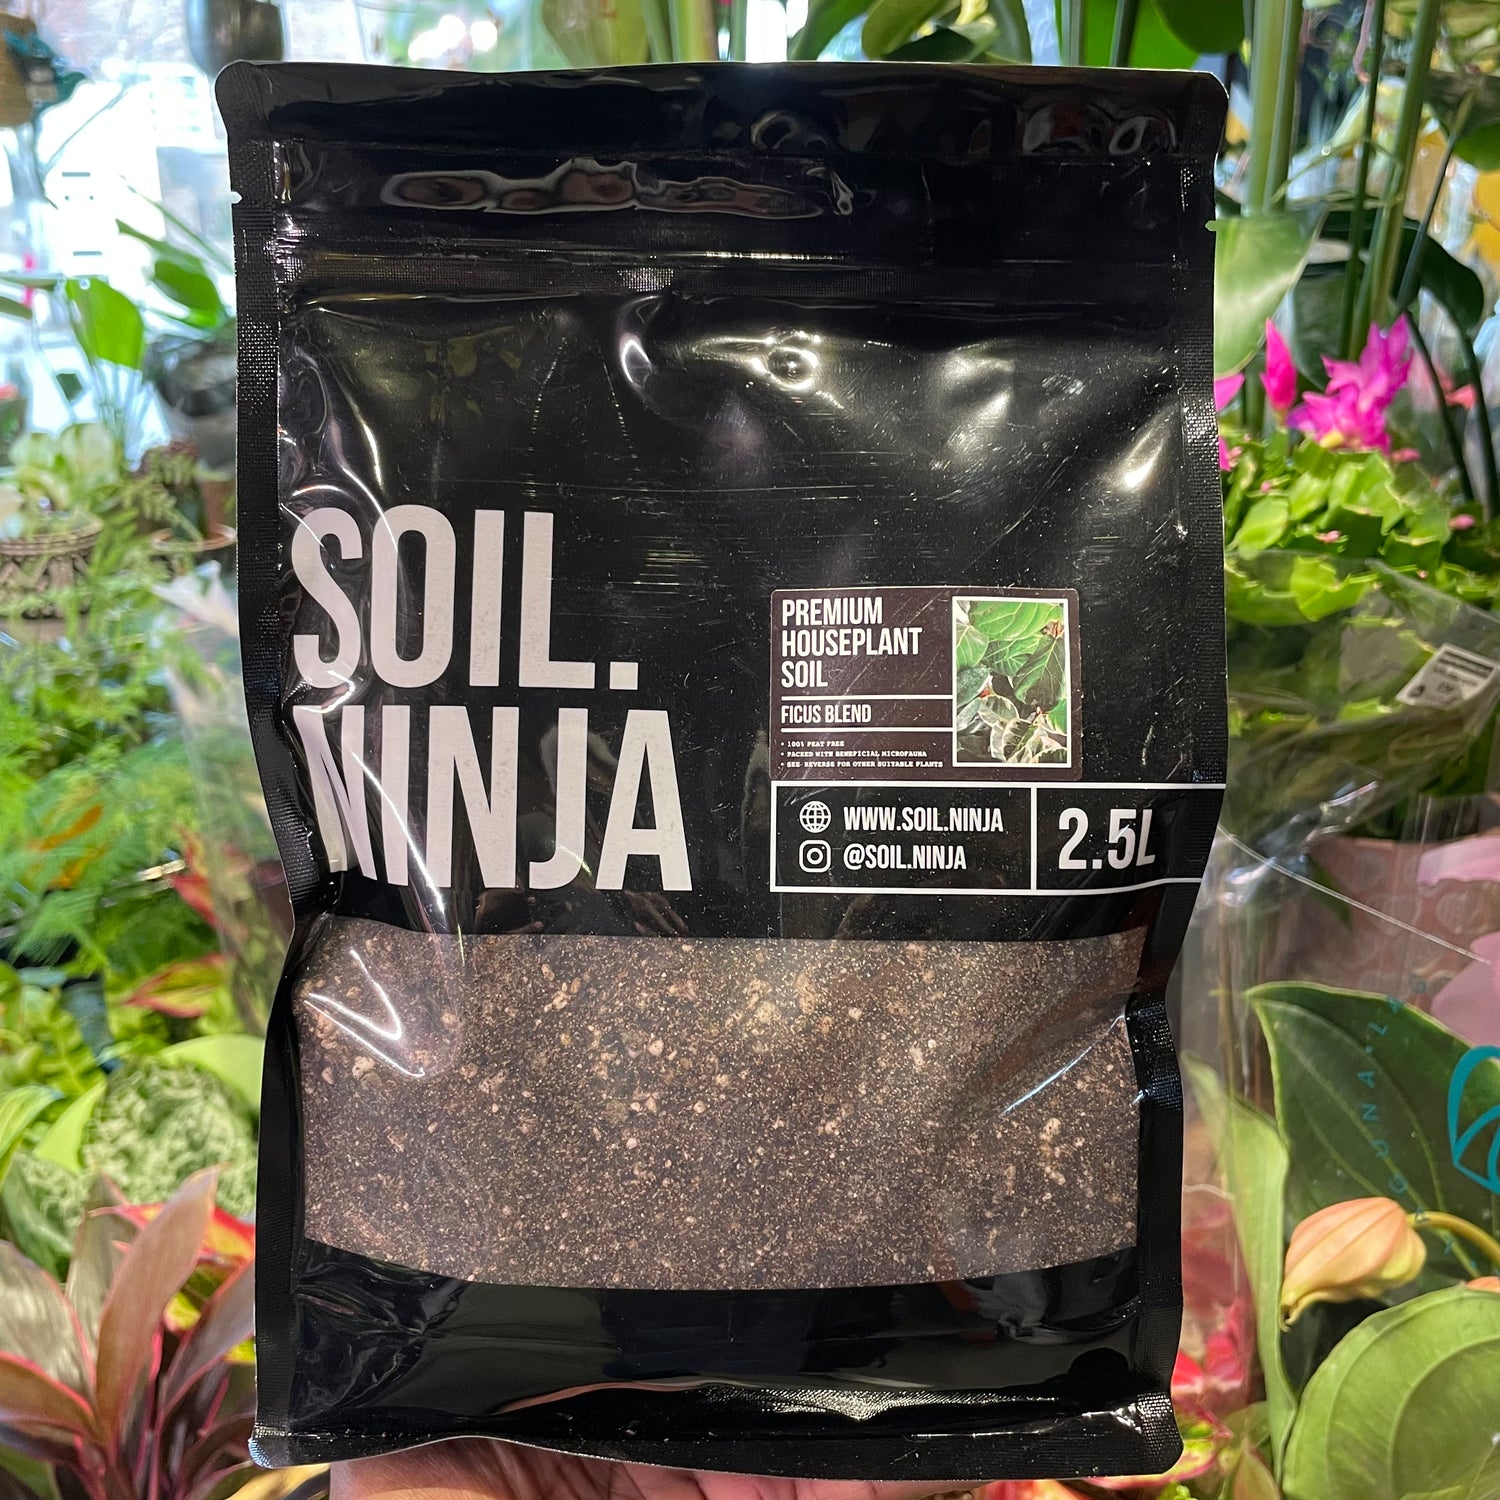 A bag of Soil Ninja | Ficus 2.5L Urban Tropicana’s store in Chiswick, London.